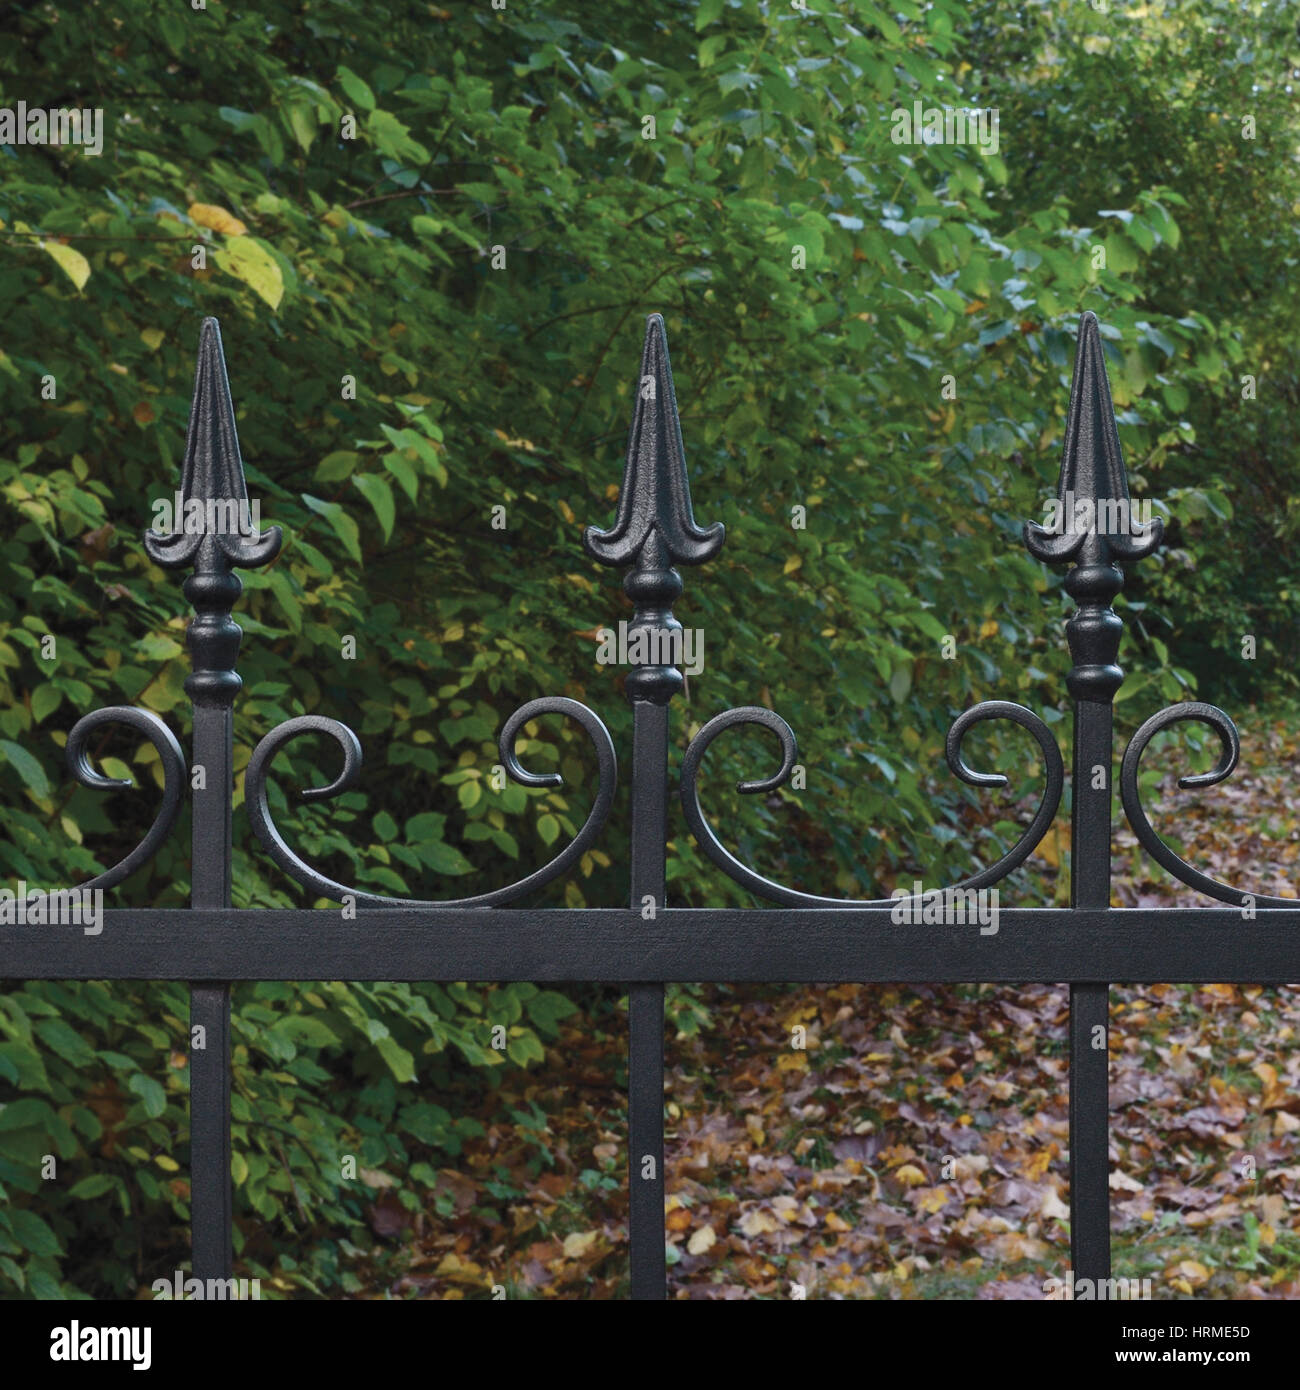 Ornate Wrought Iron Fence Stock Photos & Ornate Wrought Iron Fence ...